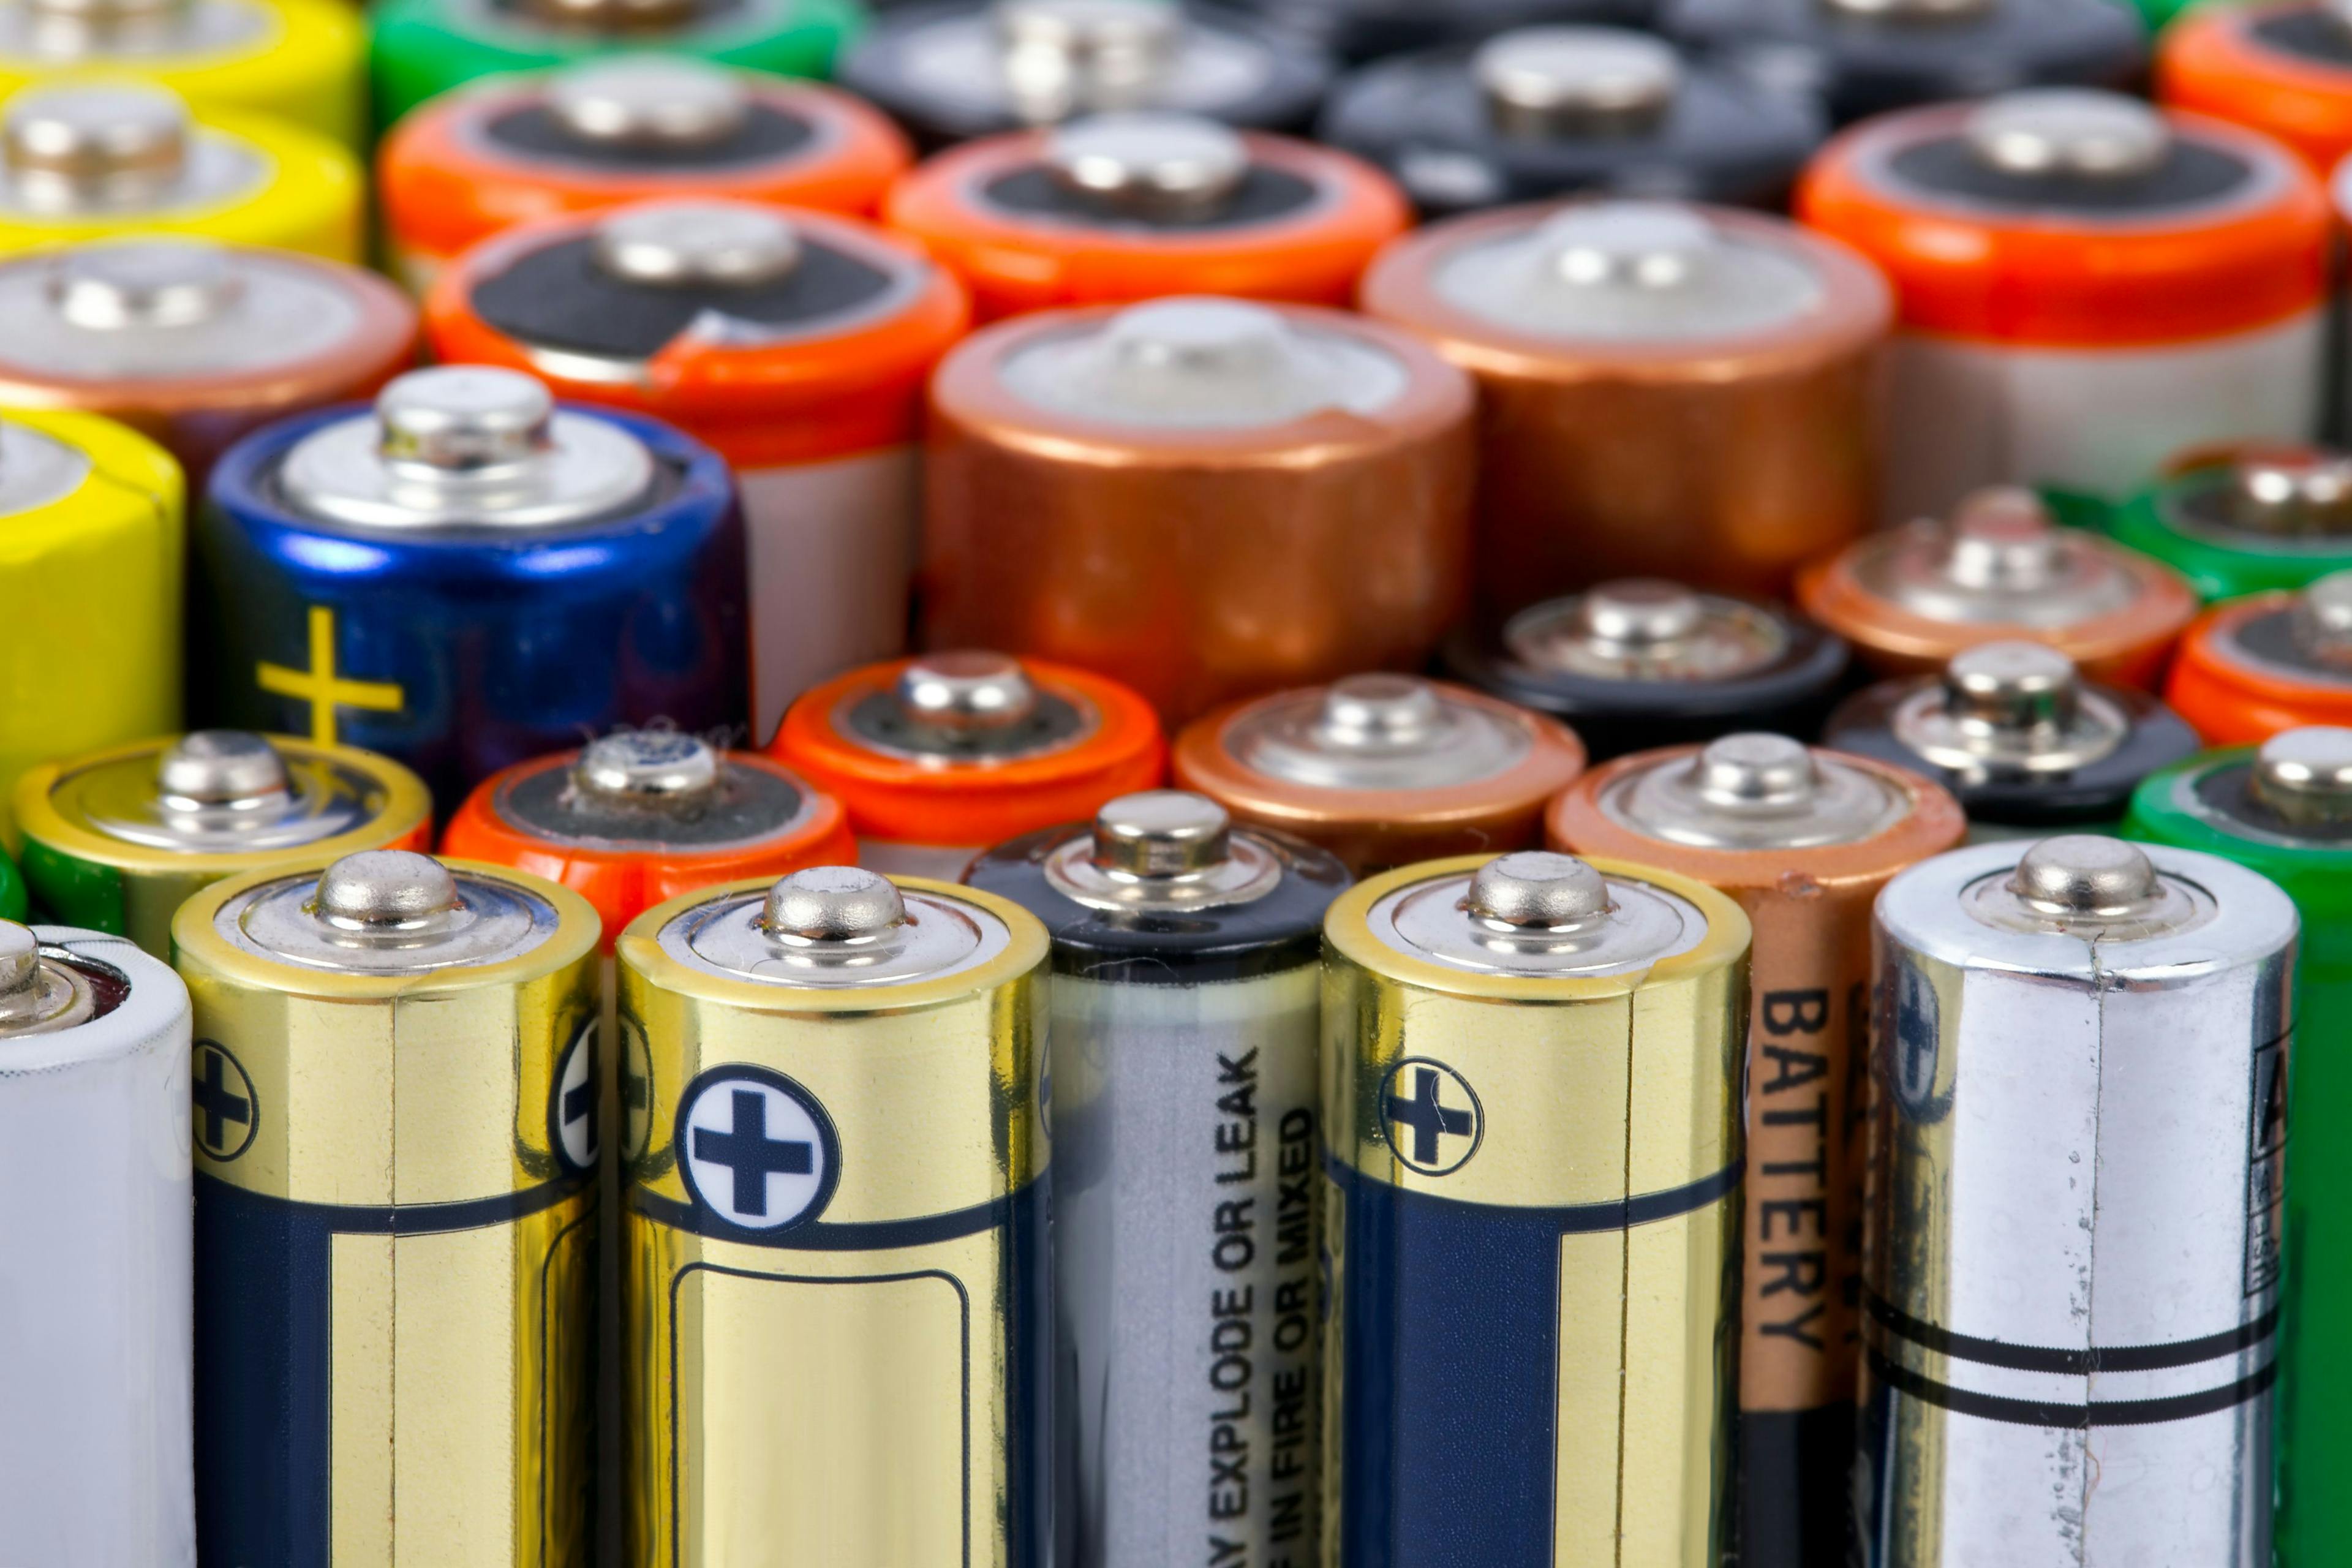 Batteries | Image Credit: © Gudellaphoto - stock.adobe.com